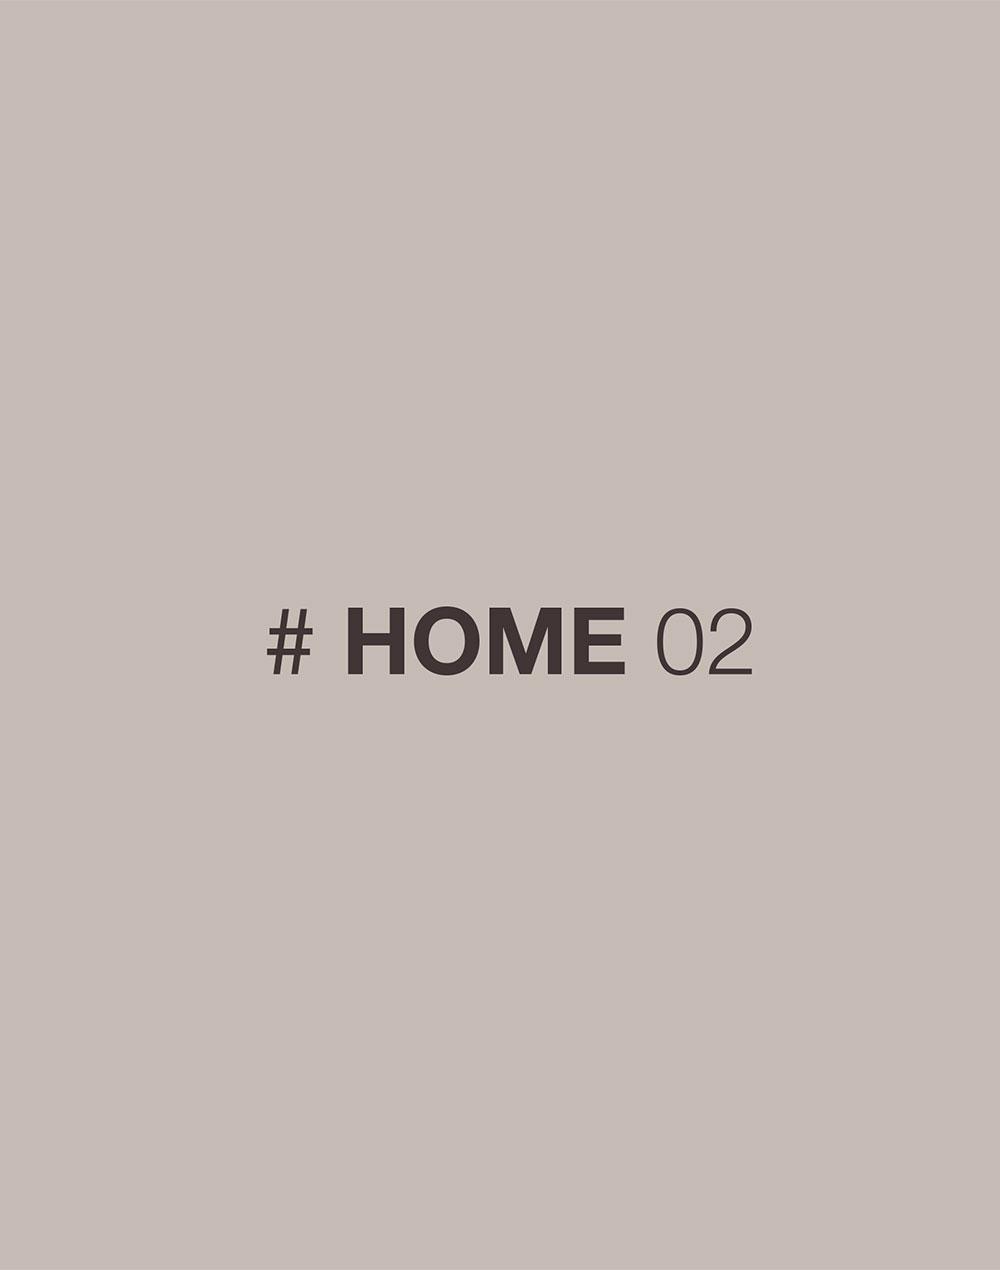 # HOME 02